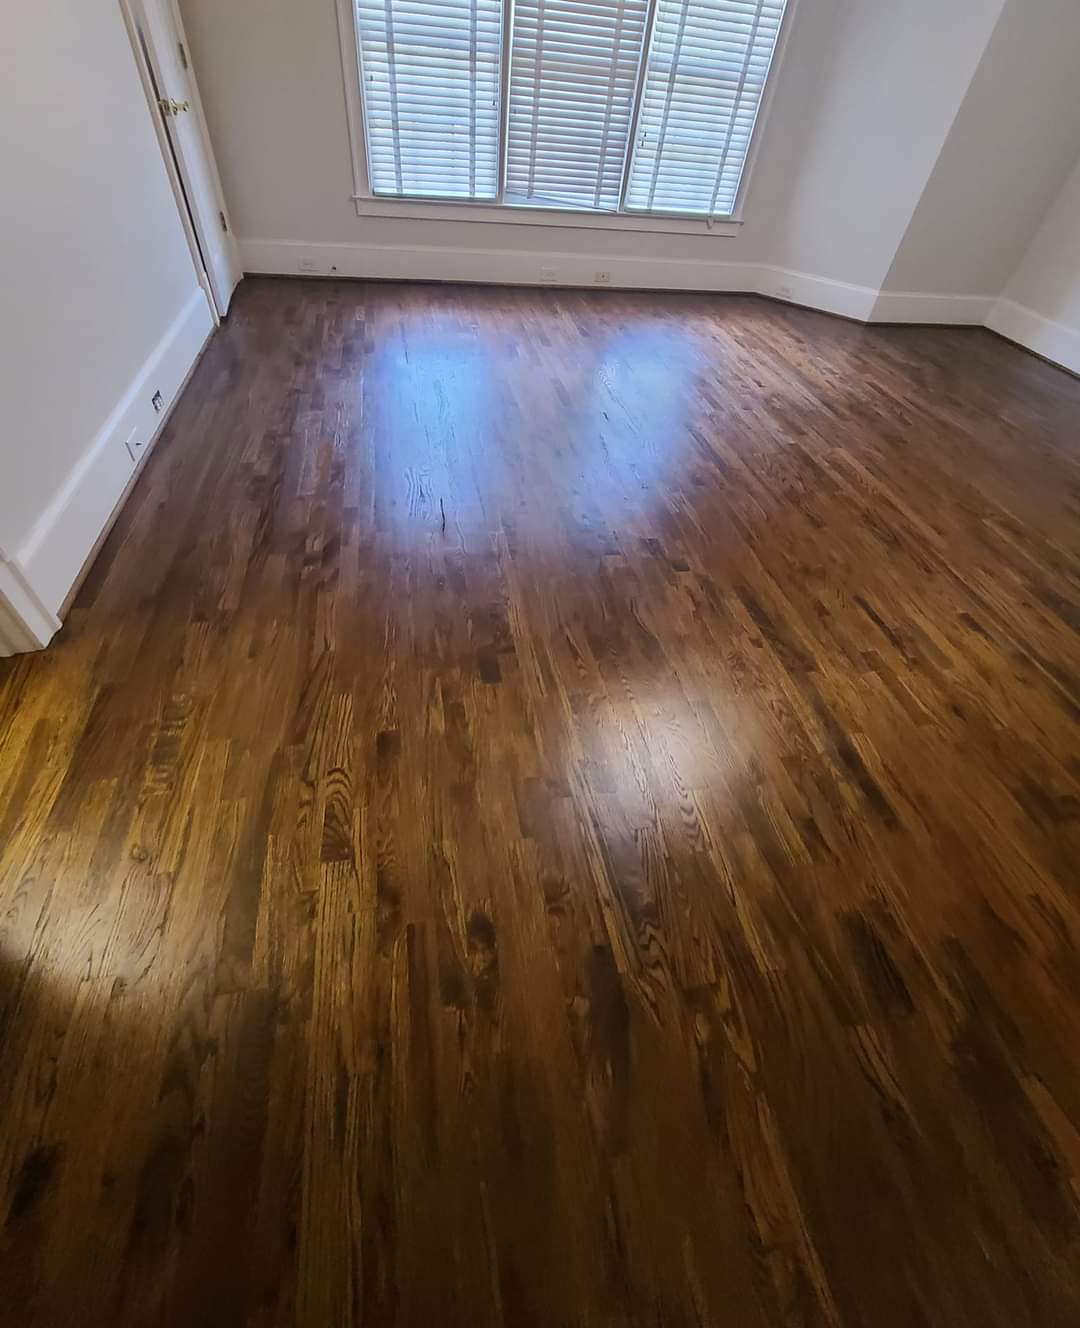 We love the dark finish on this freshly installed hardwood floor.